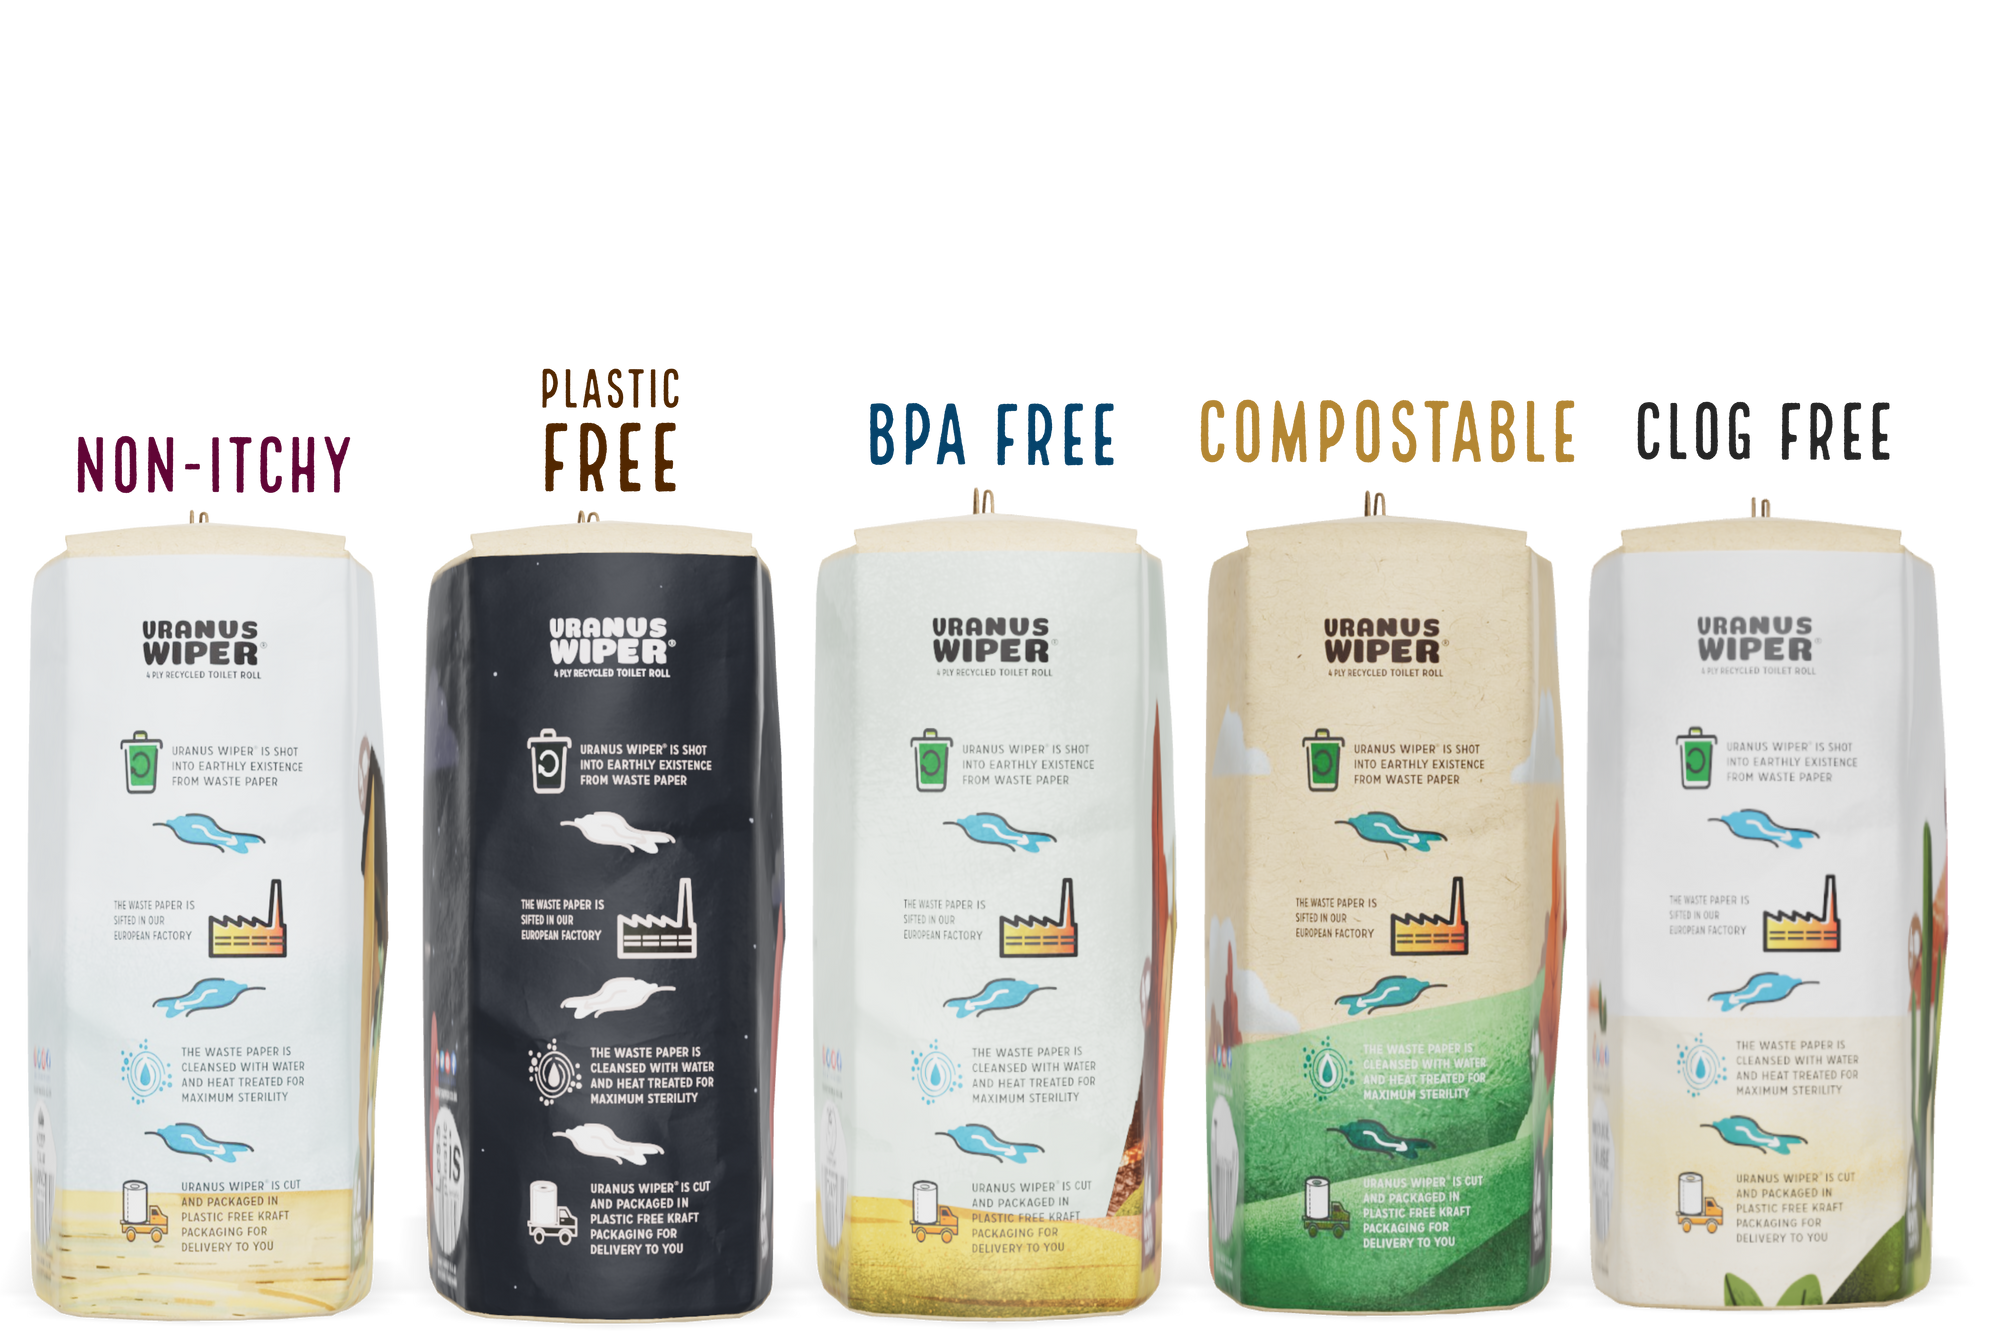 Sustainable plastic free toilet paper uk best toilet paper brand